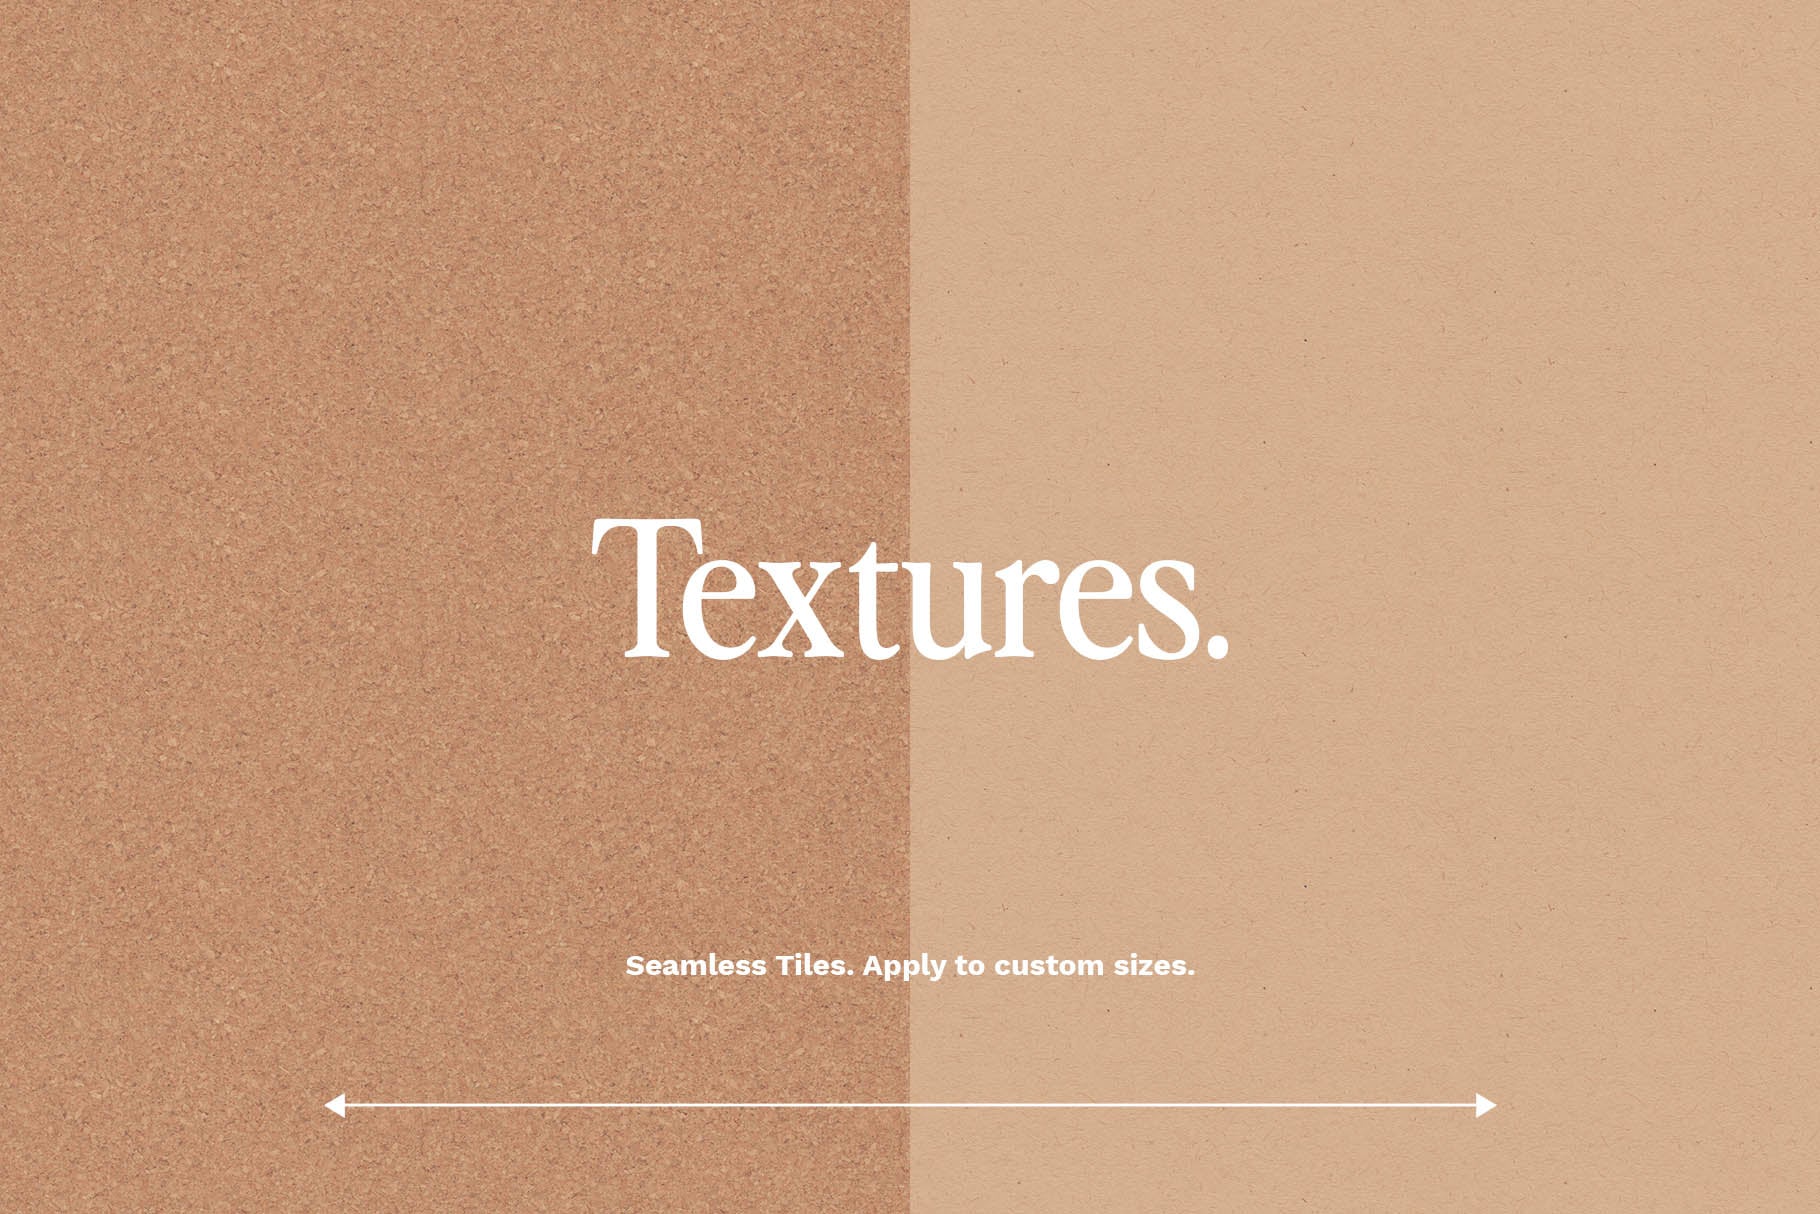 Natural Textures Seamless Patterns